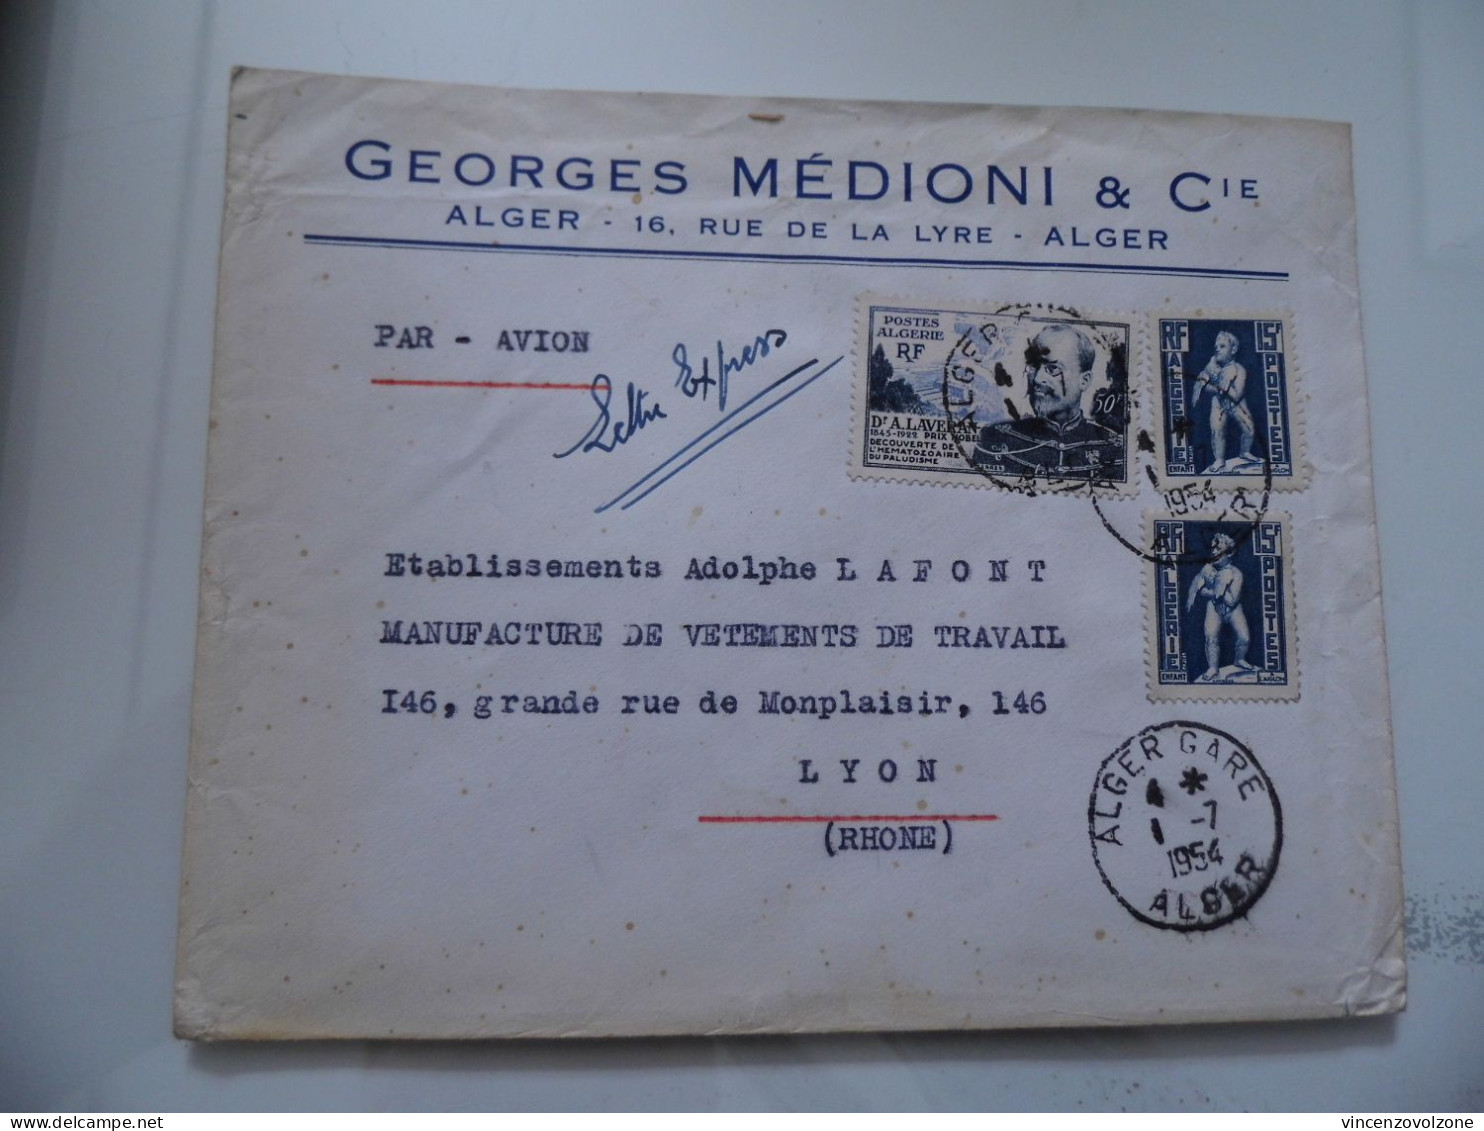 Busta Viaggiata "GEORGES MEDIONI & C.IE ALGER" 1954 - Airmail